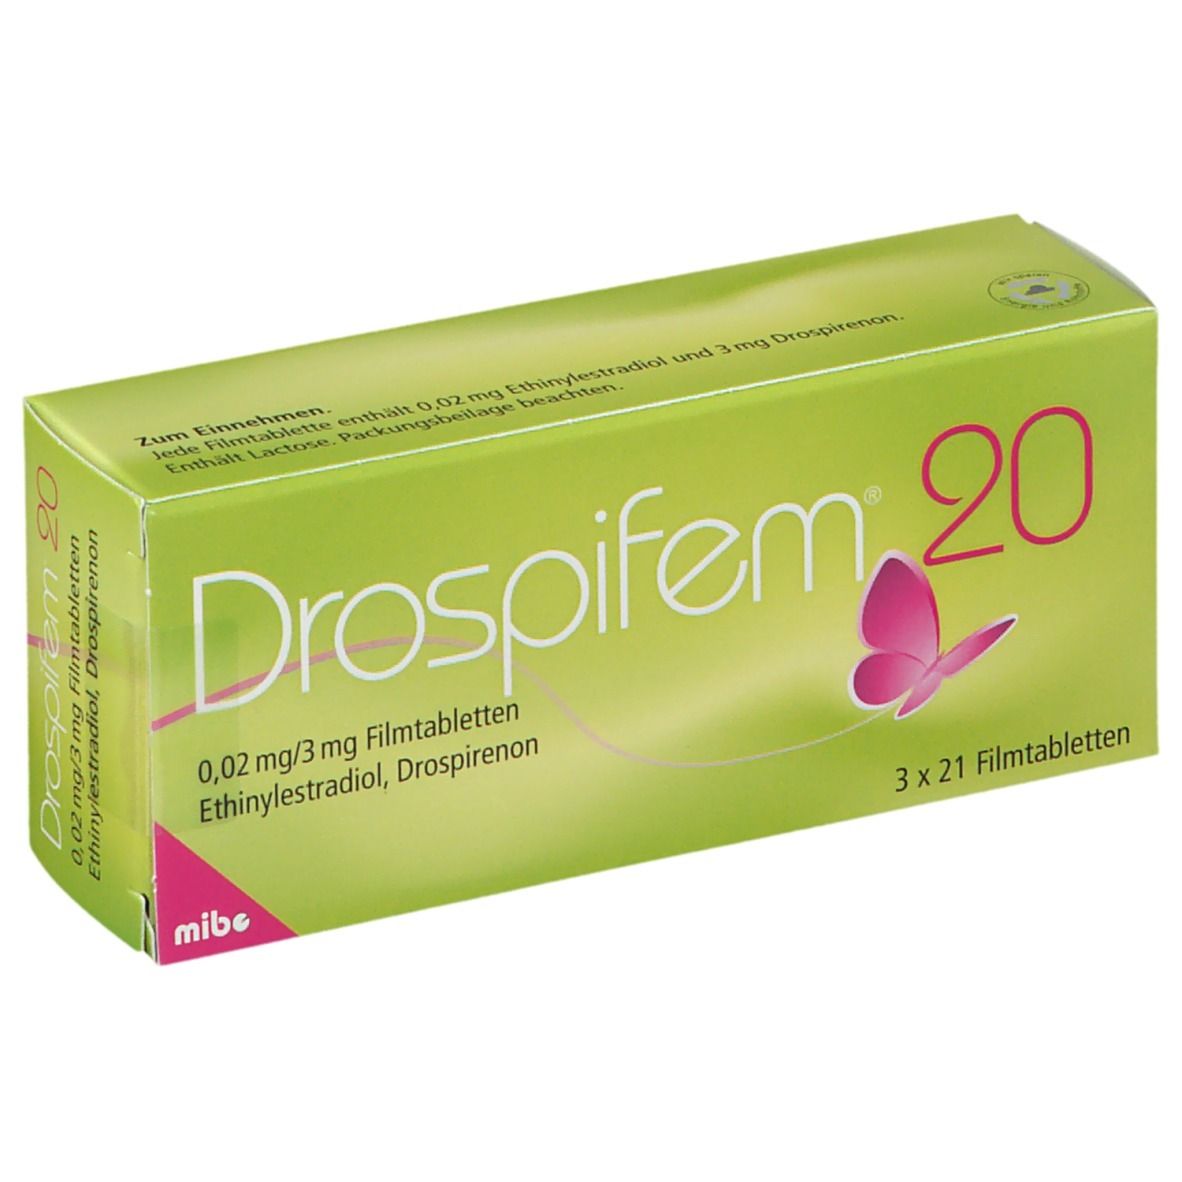 Drospifem 20 0,02 mg/3 mg